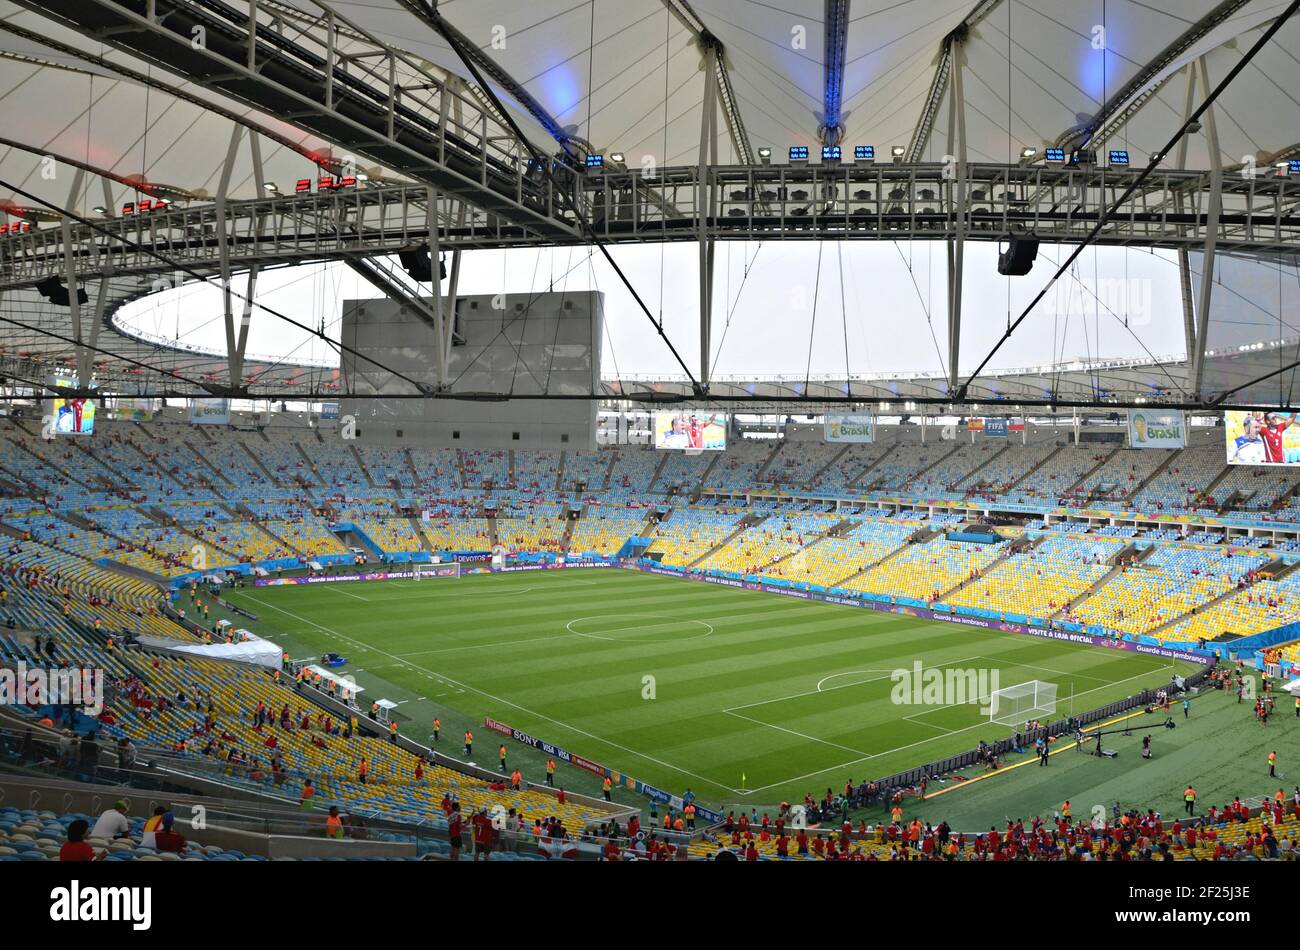 Panoramic interior view of the legendary Maracanã Stadium during the 2014 World Cup in Rio de Janeiro, Brazil. Stock Photo